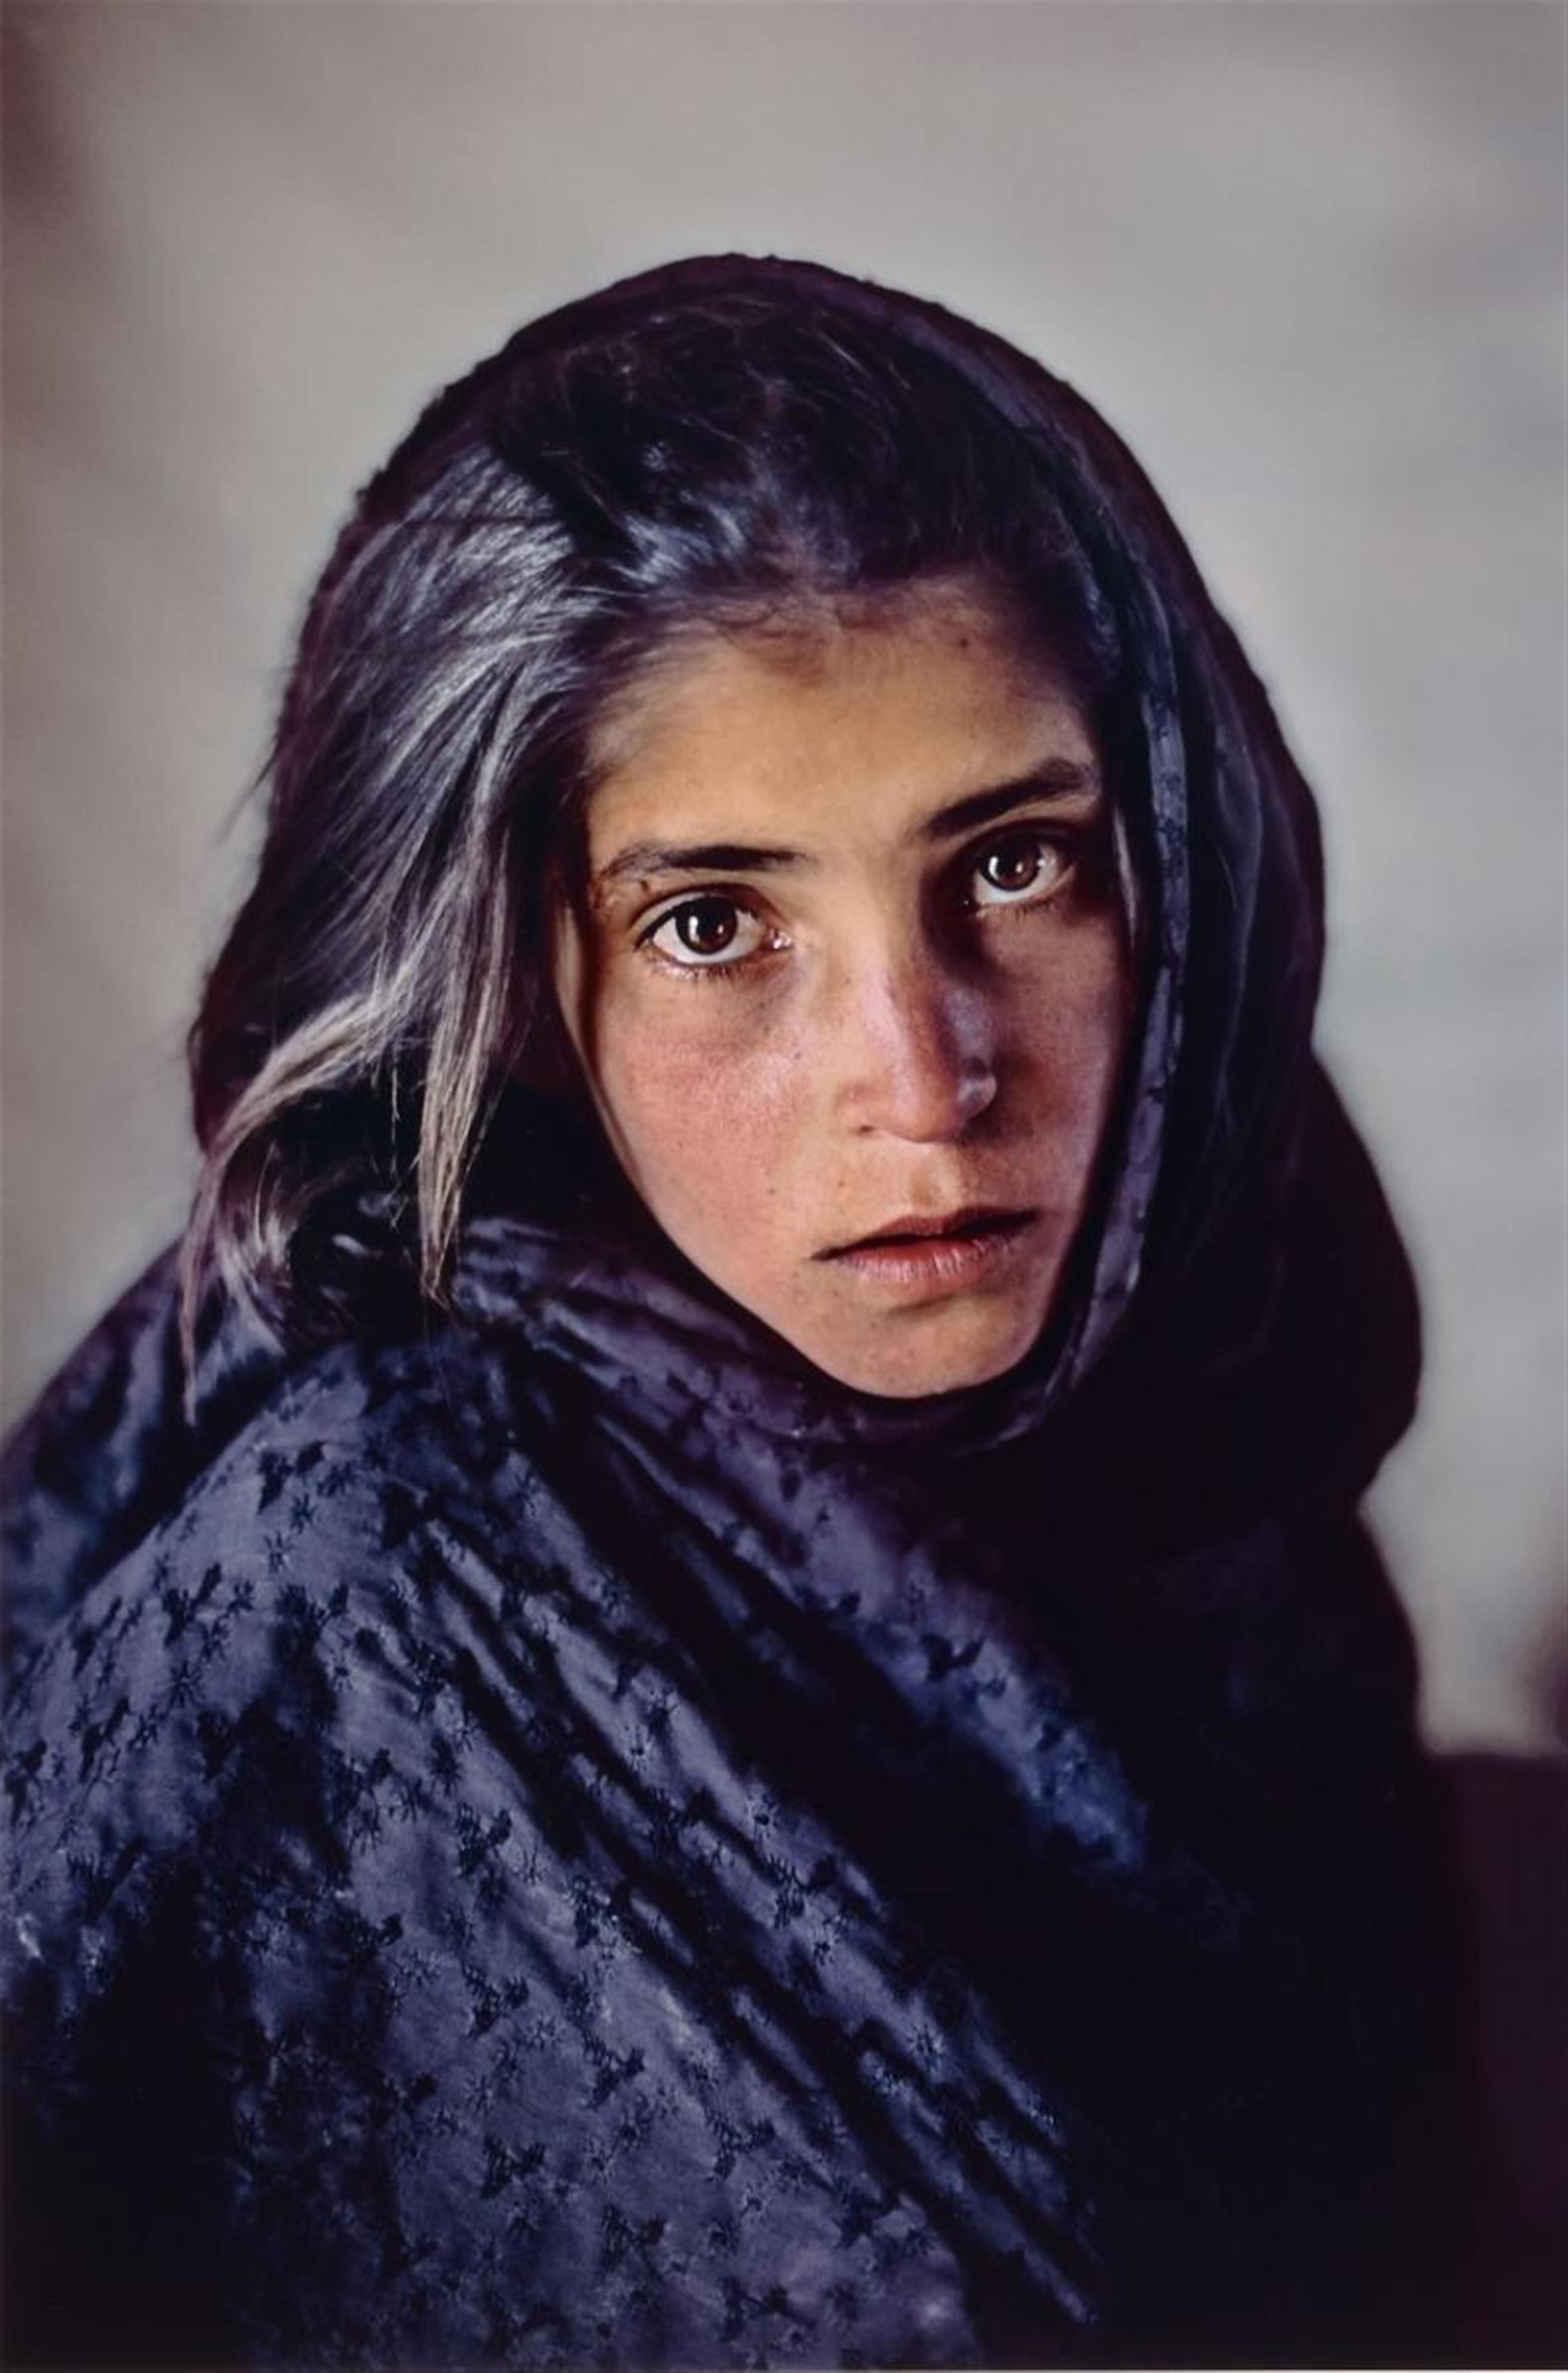 Steve McCurry - School Girl, Kabul, Afghanistan - image-1